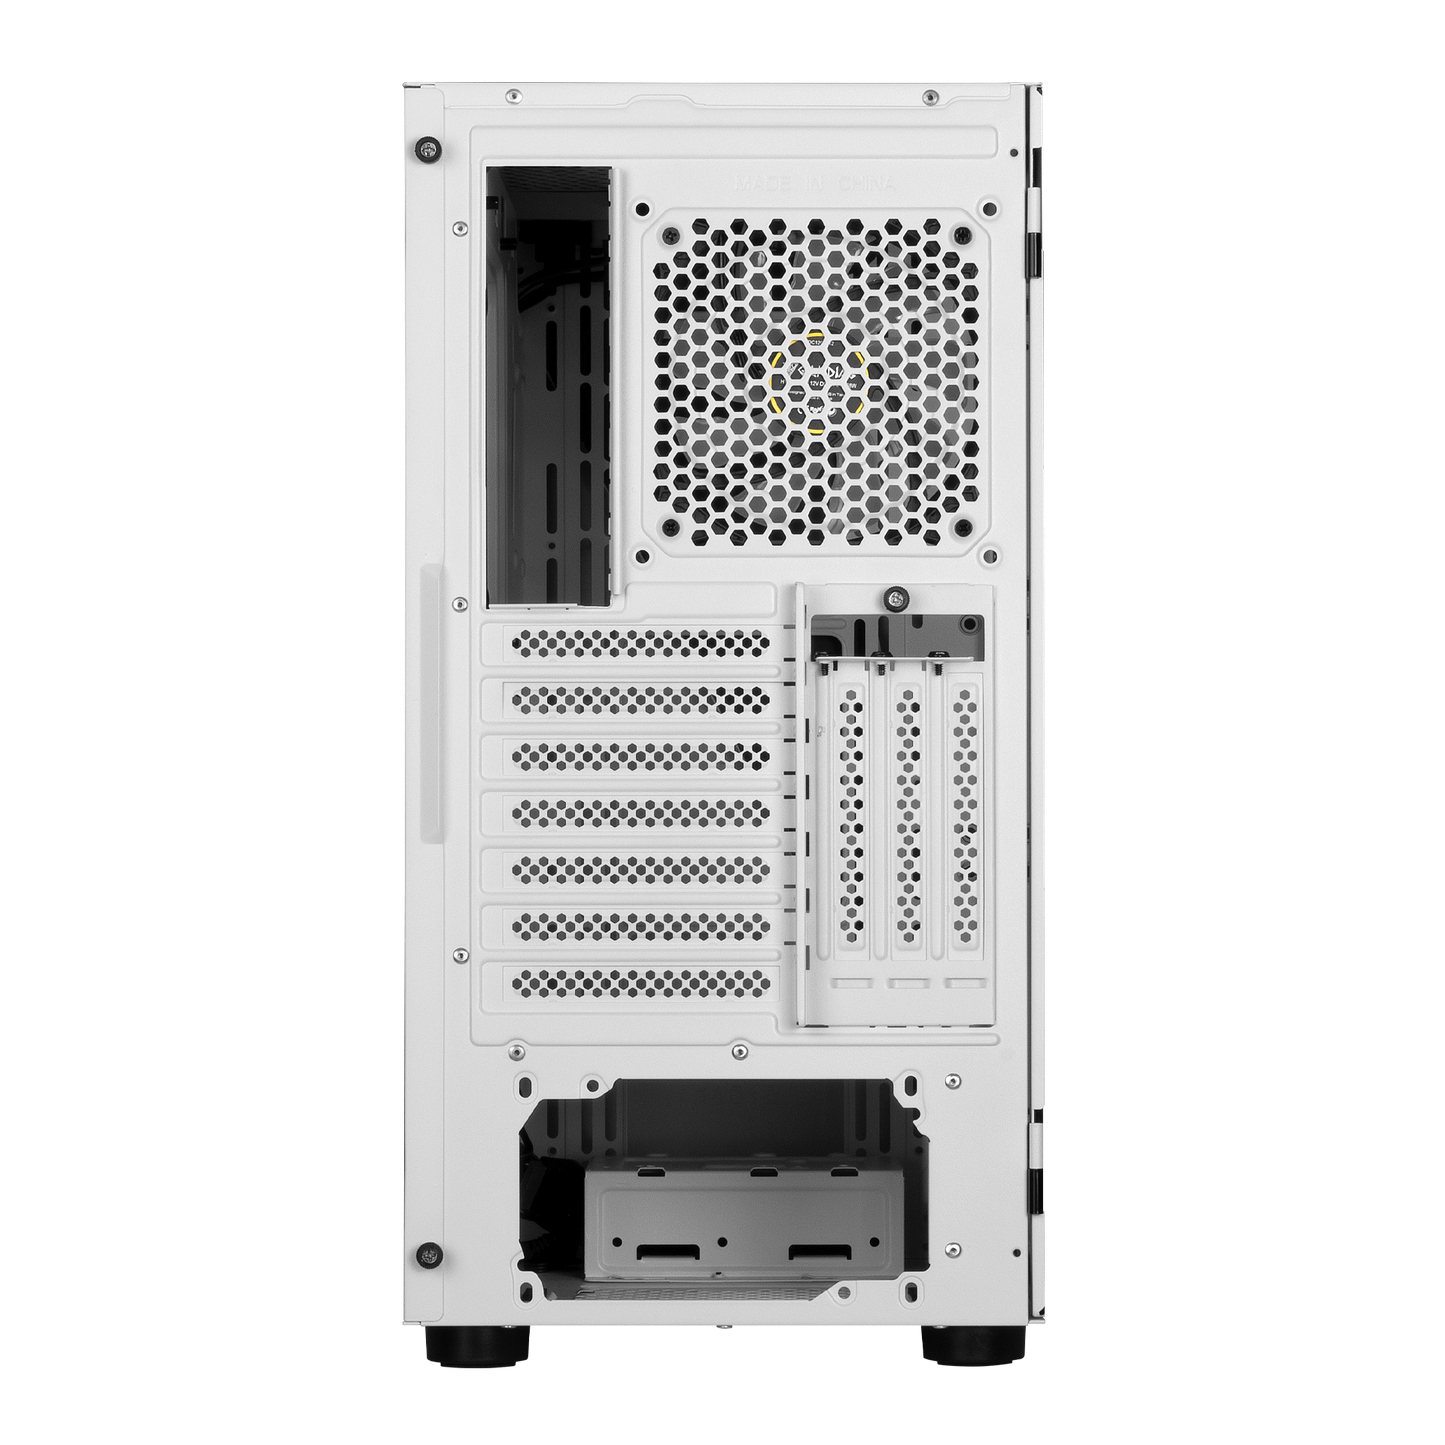 Gamdias Argus E4 Elite Computer Case ATX Mid Tower Gaming PC Case with 1x rear ARGB Fan